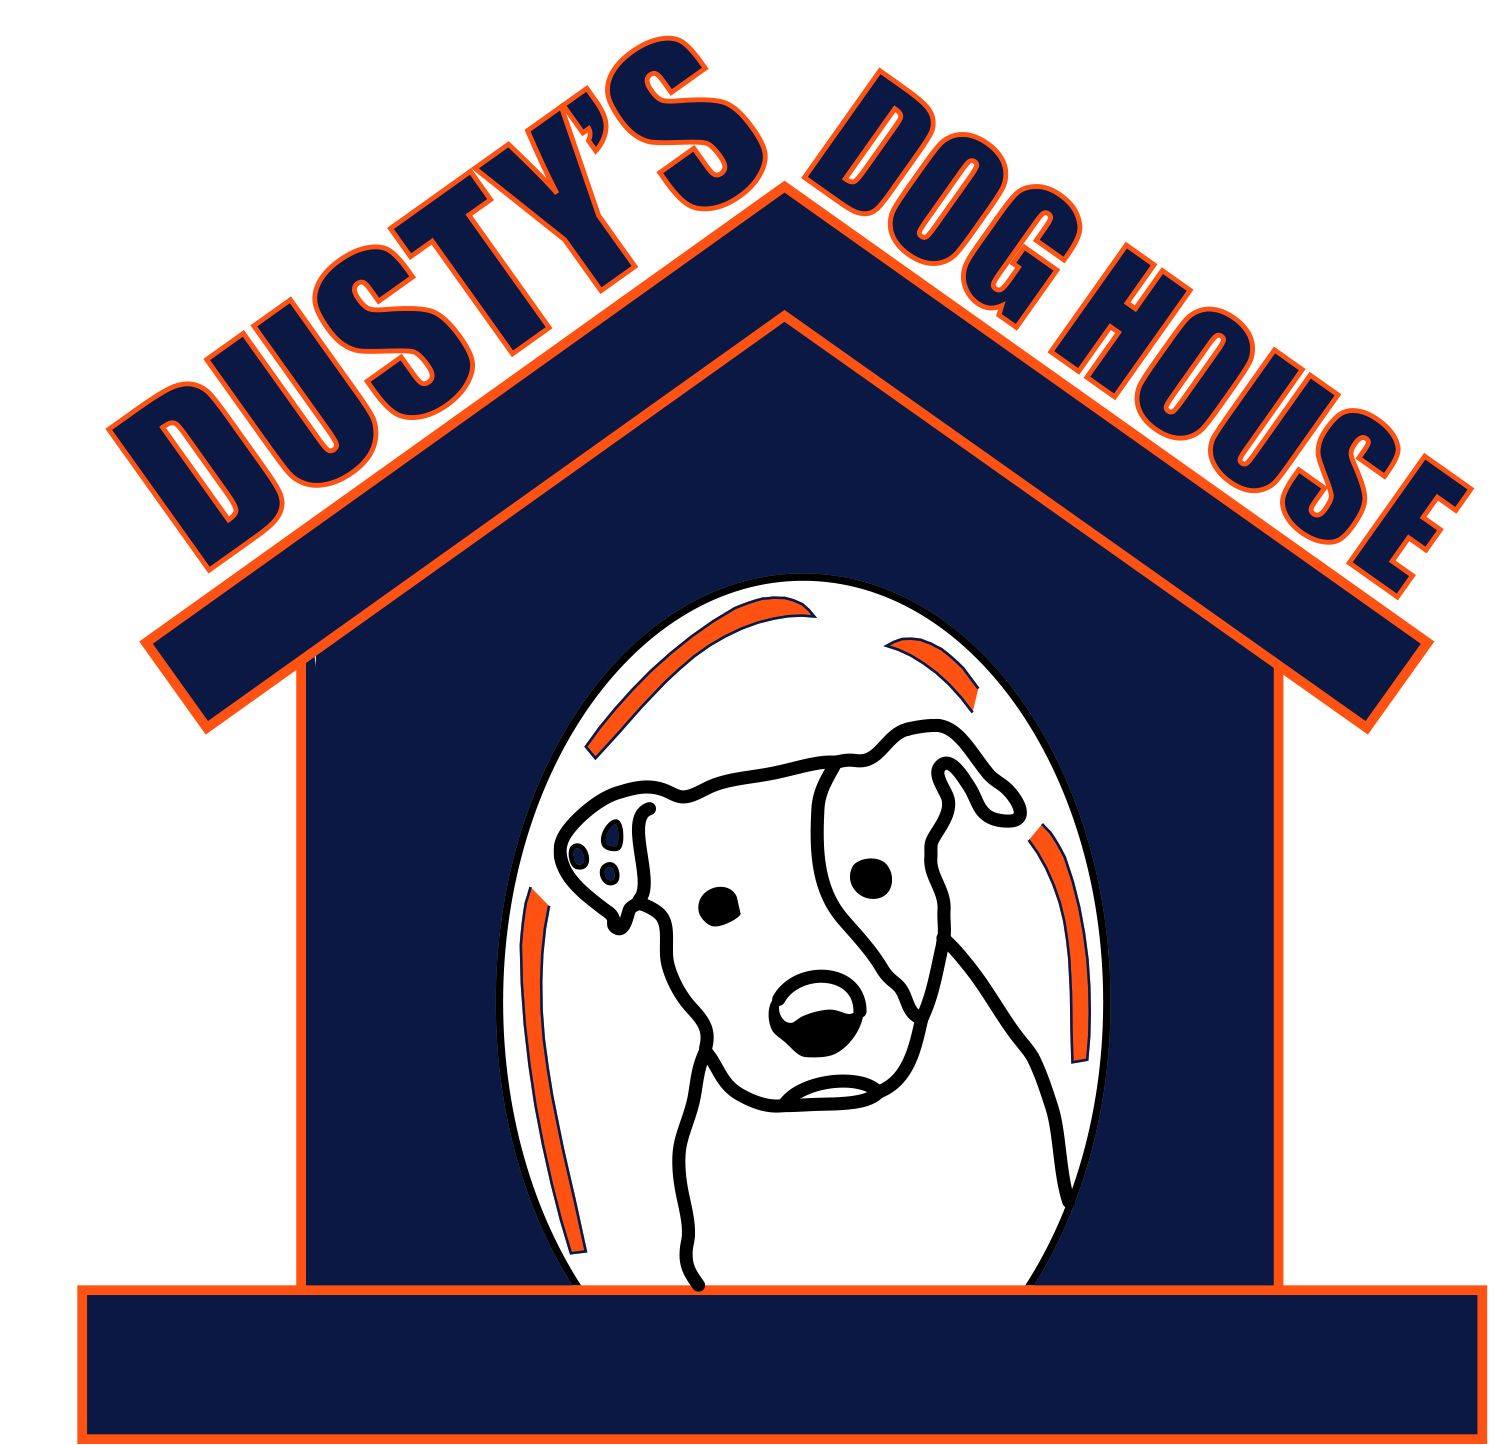 Дог хаус демо dogedraws com. Хаус собак. Авы для хаусов с собаками. Хаус собак аватарка. Название для хаусов собак.